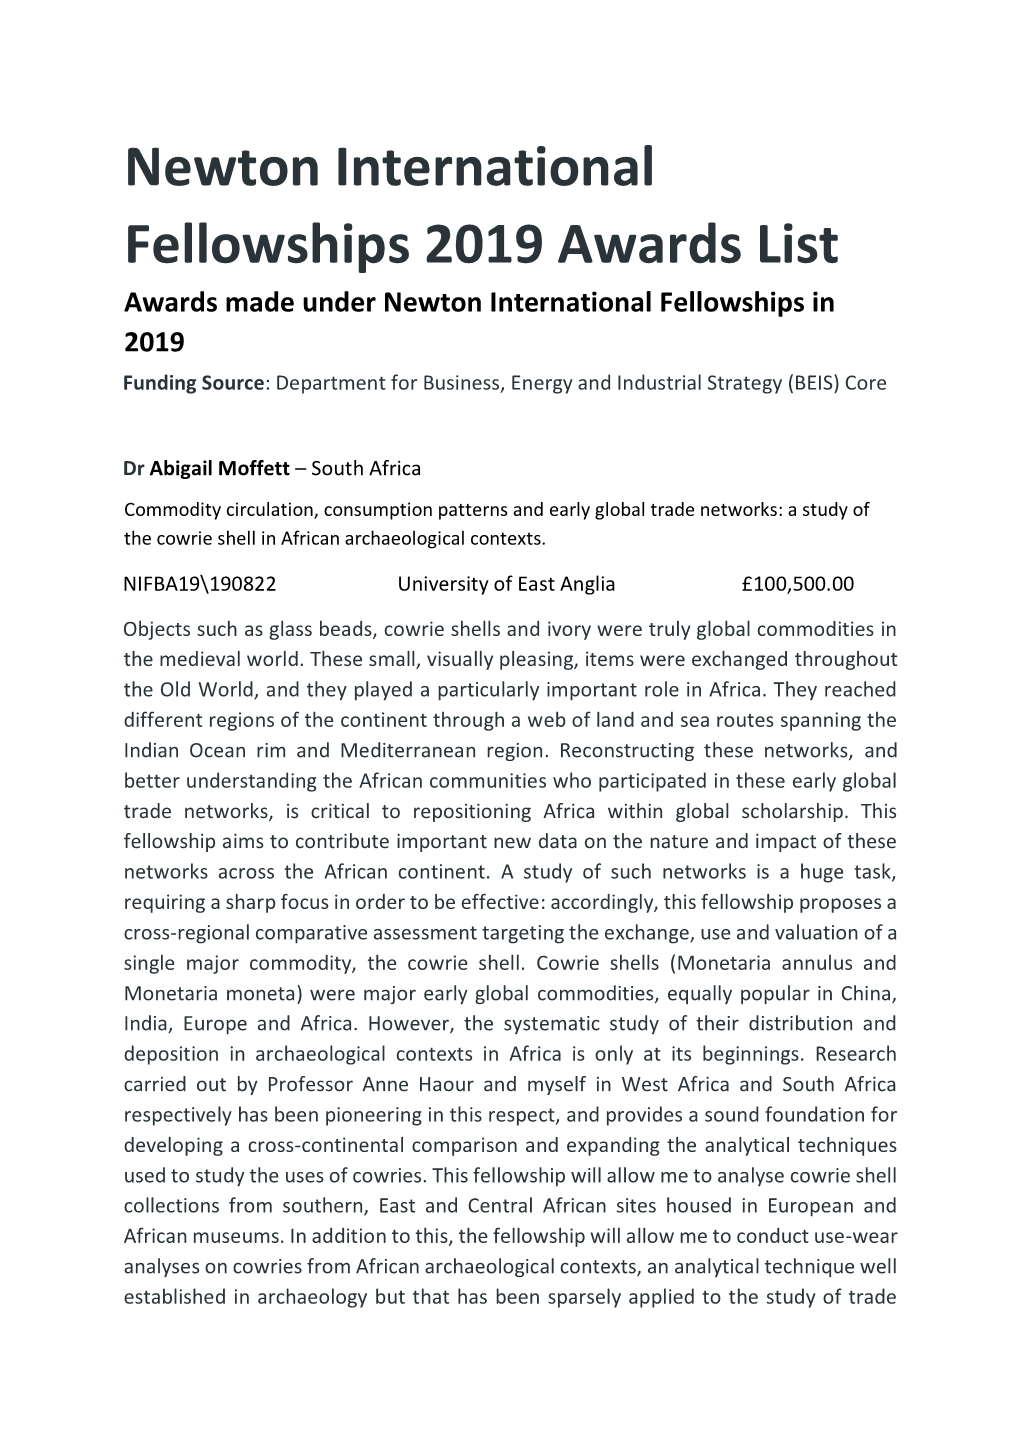 Newton International Fellowships 2019 Awards List